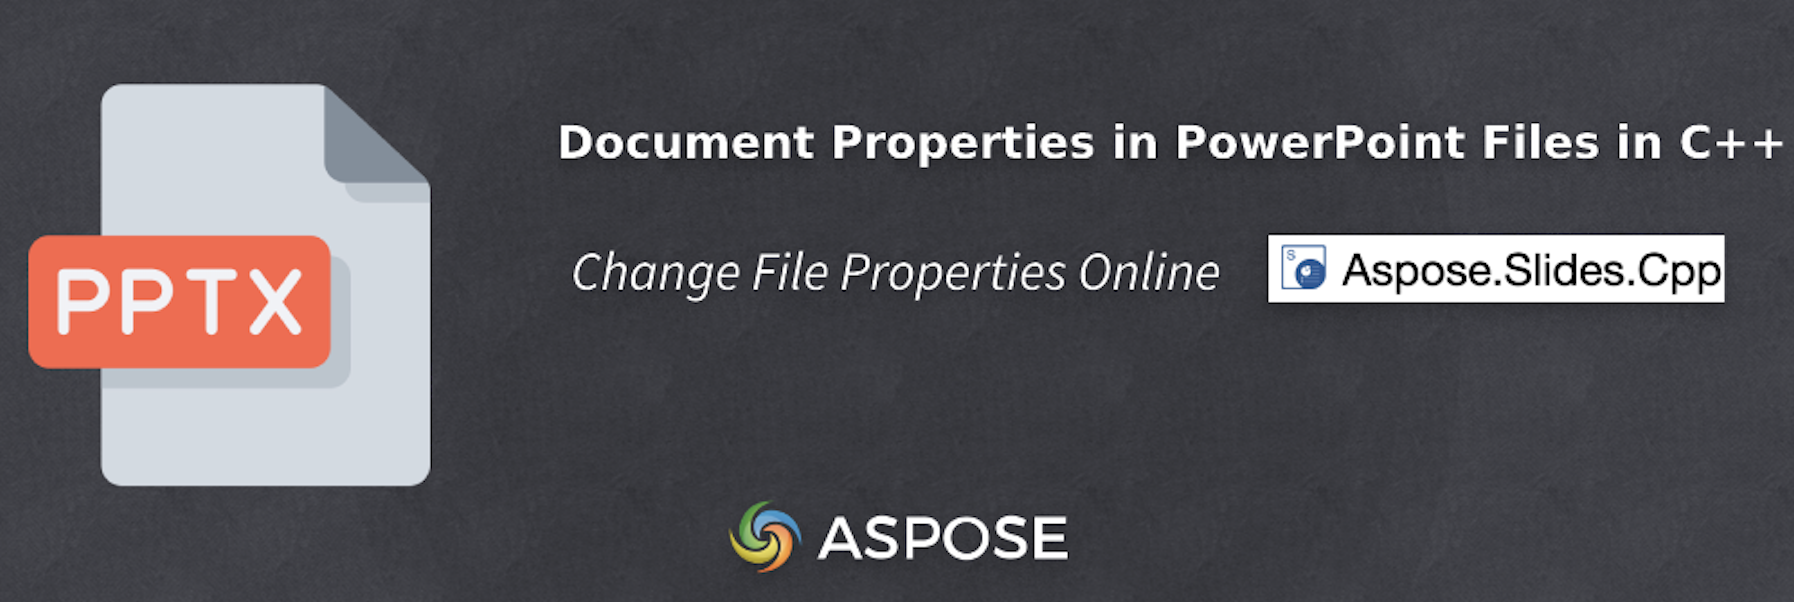 Access Document Properties in PowerPoint in C++